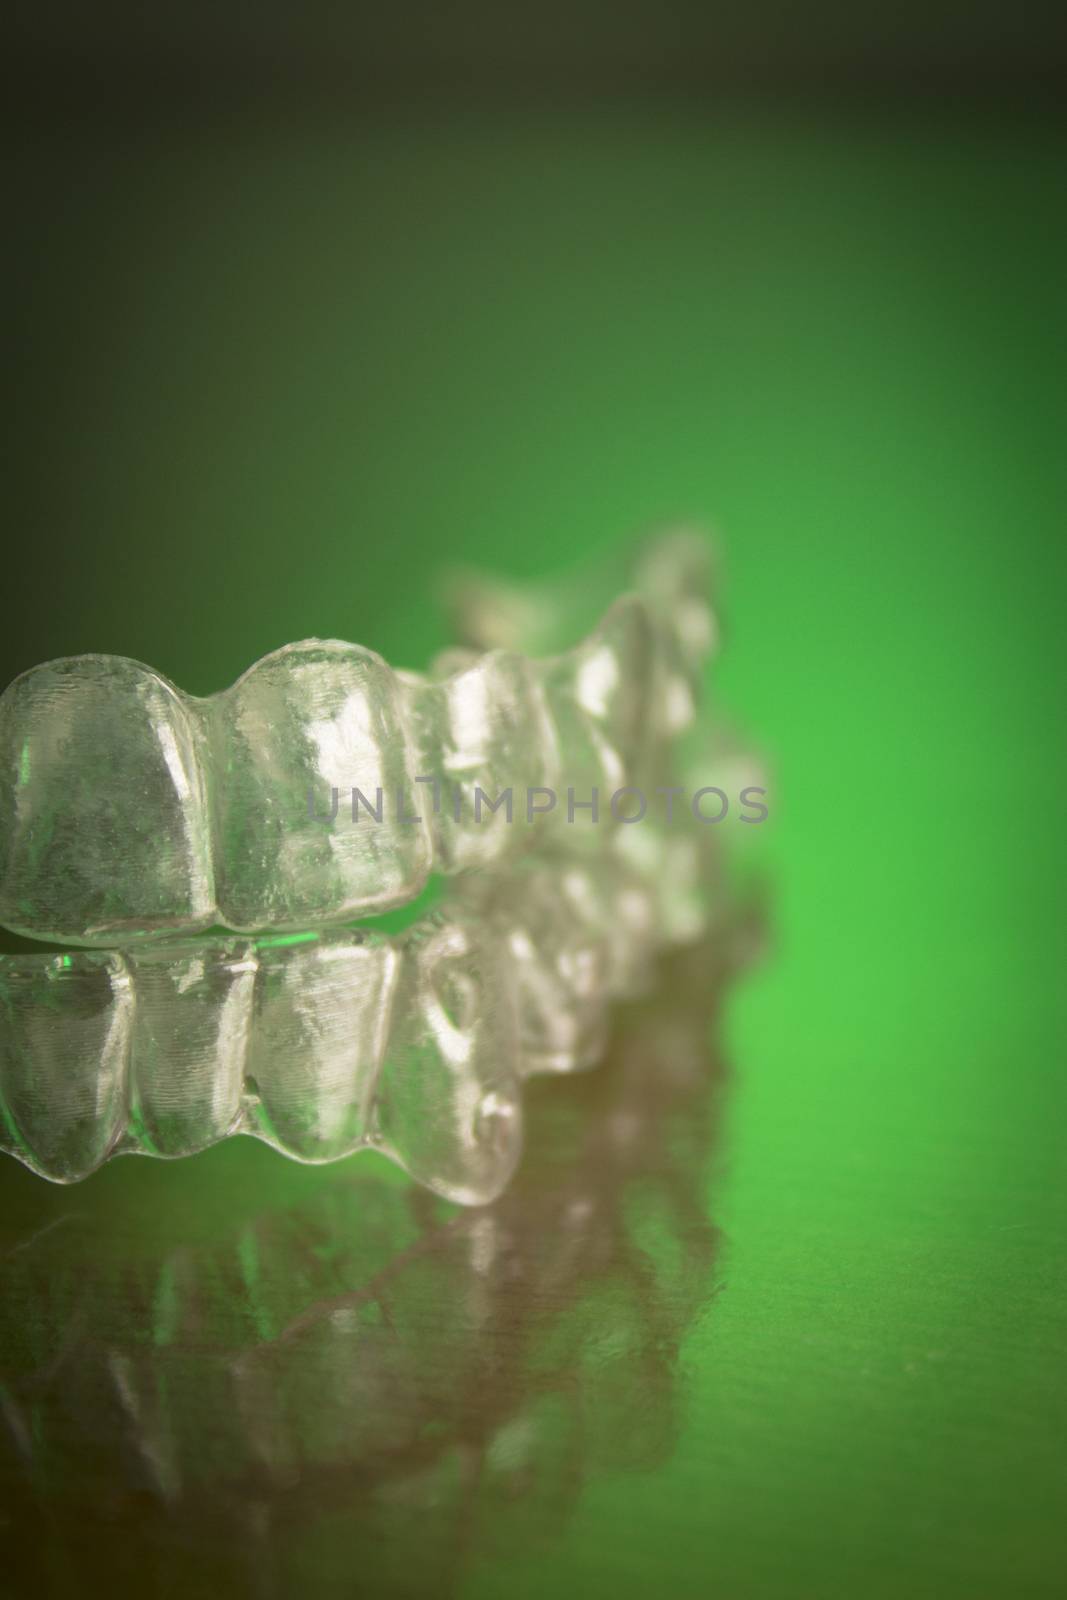 Plastic dental orthodontics by GemaIbarra